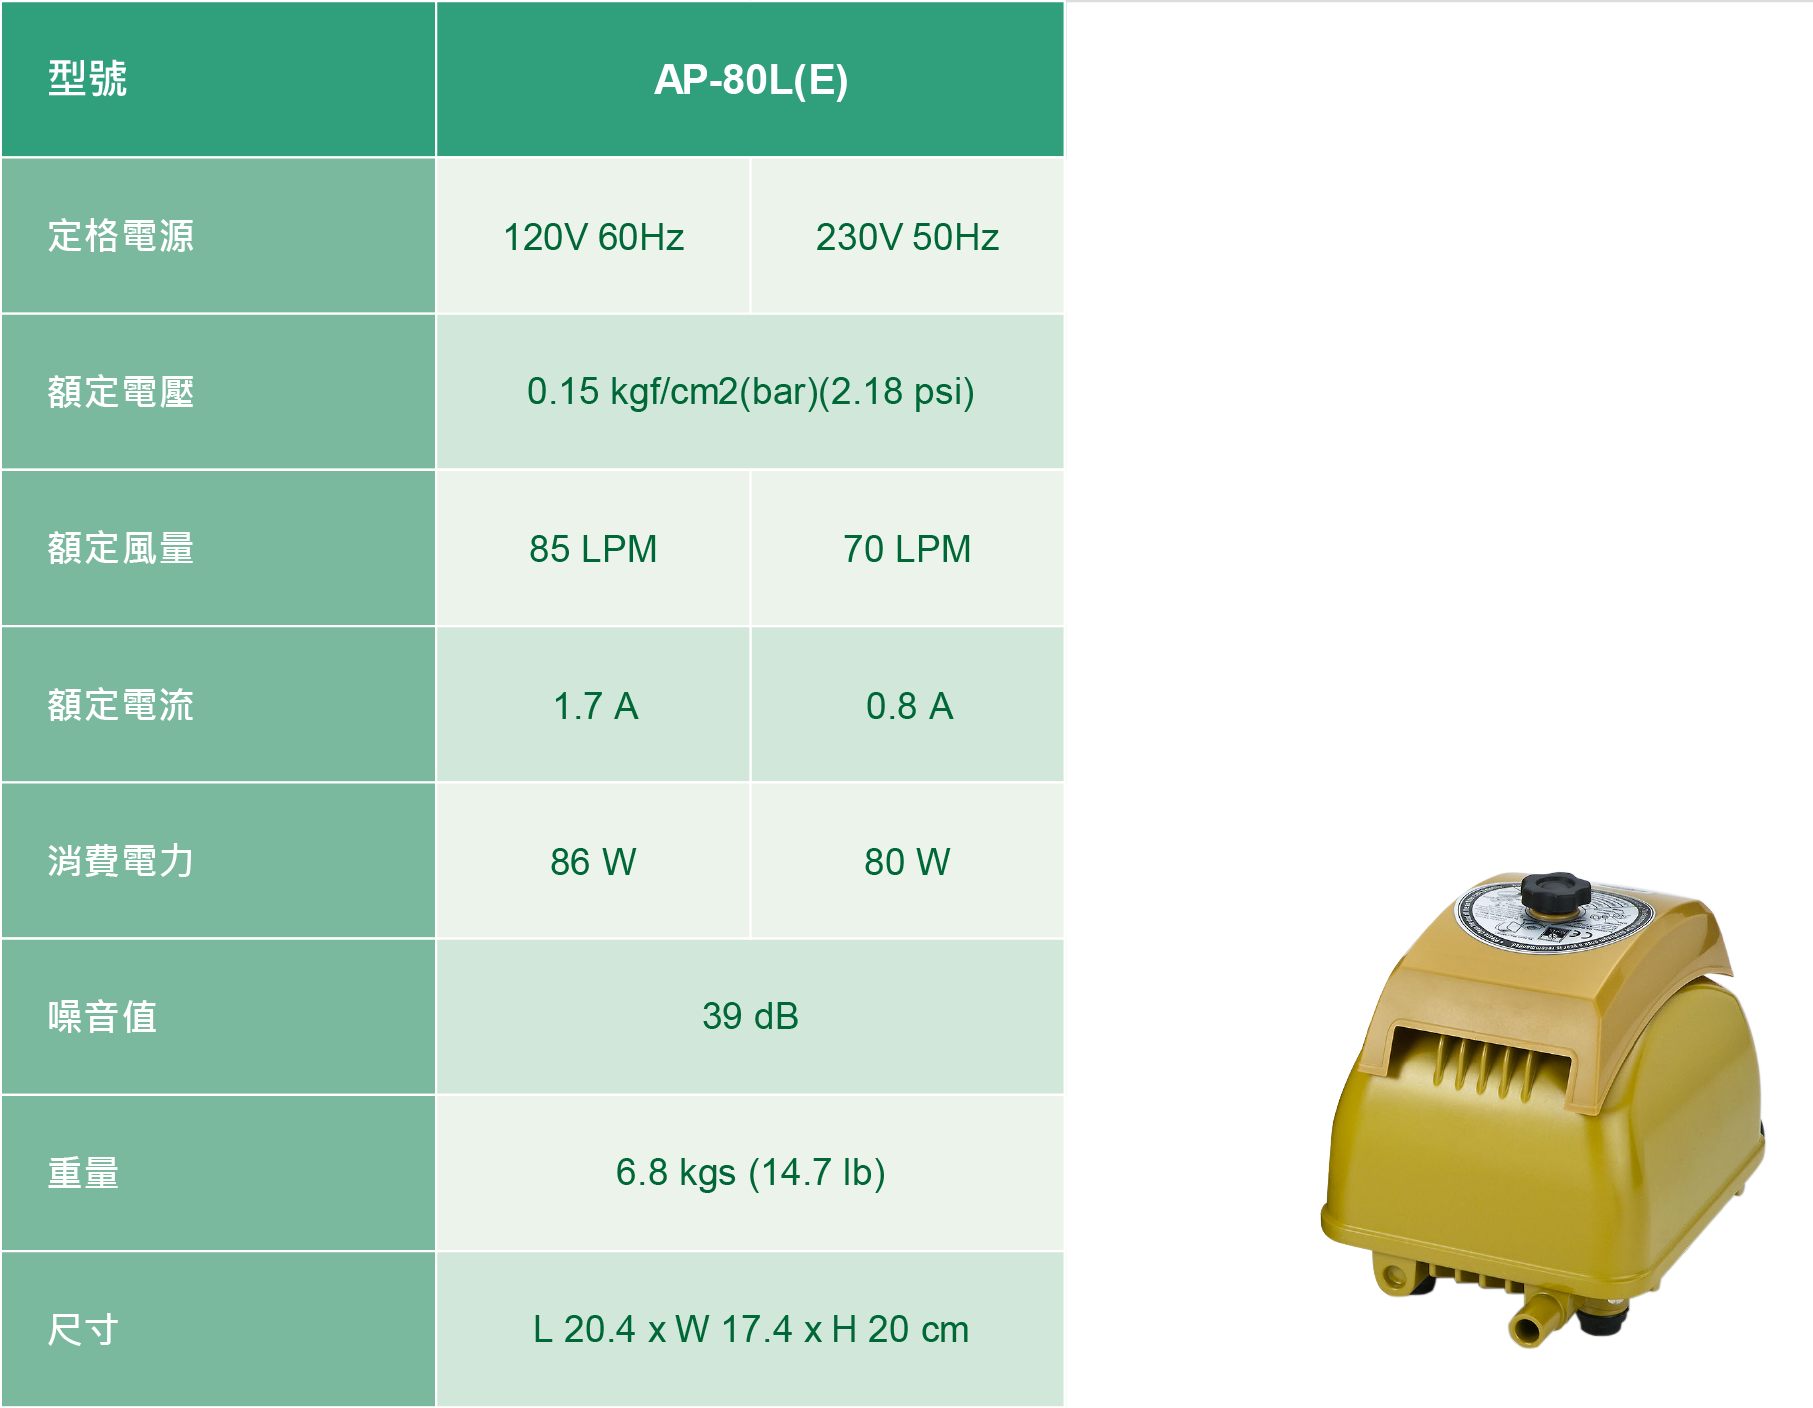 Linear Air Pumps AP-80L(E) Performance